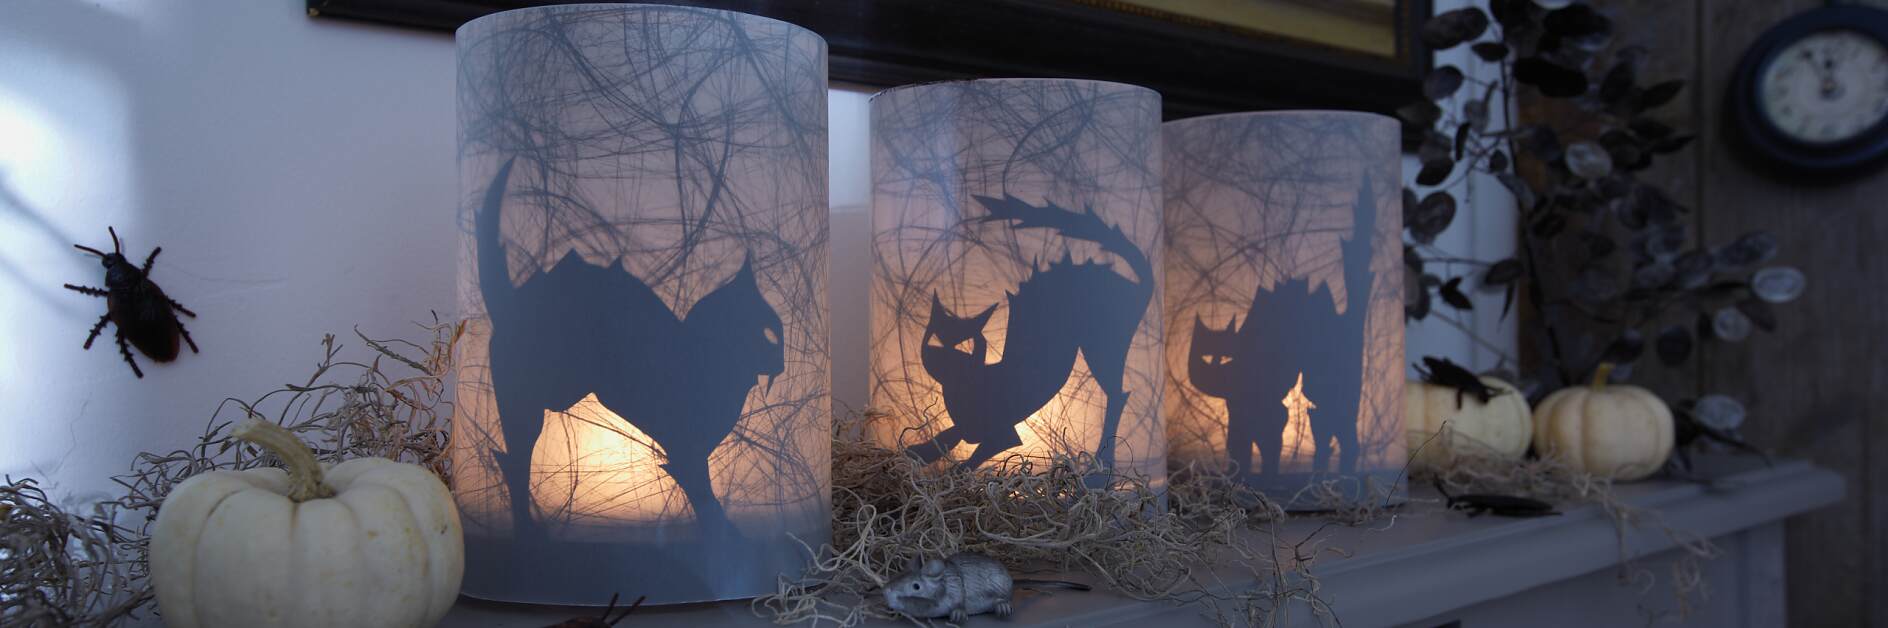 DIY Halloween Catty Candlelight Decoration Idea